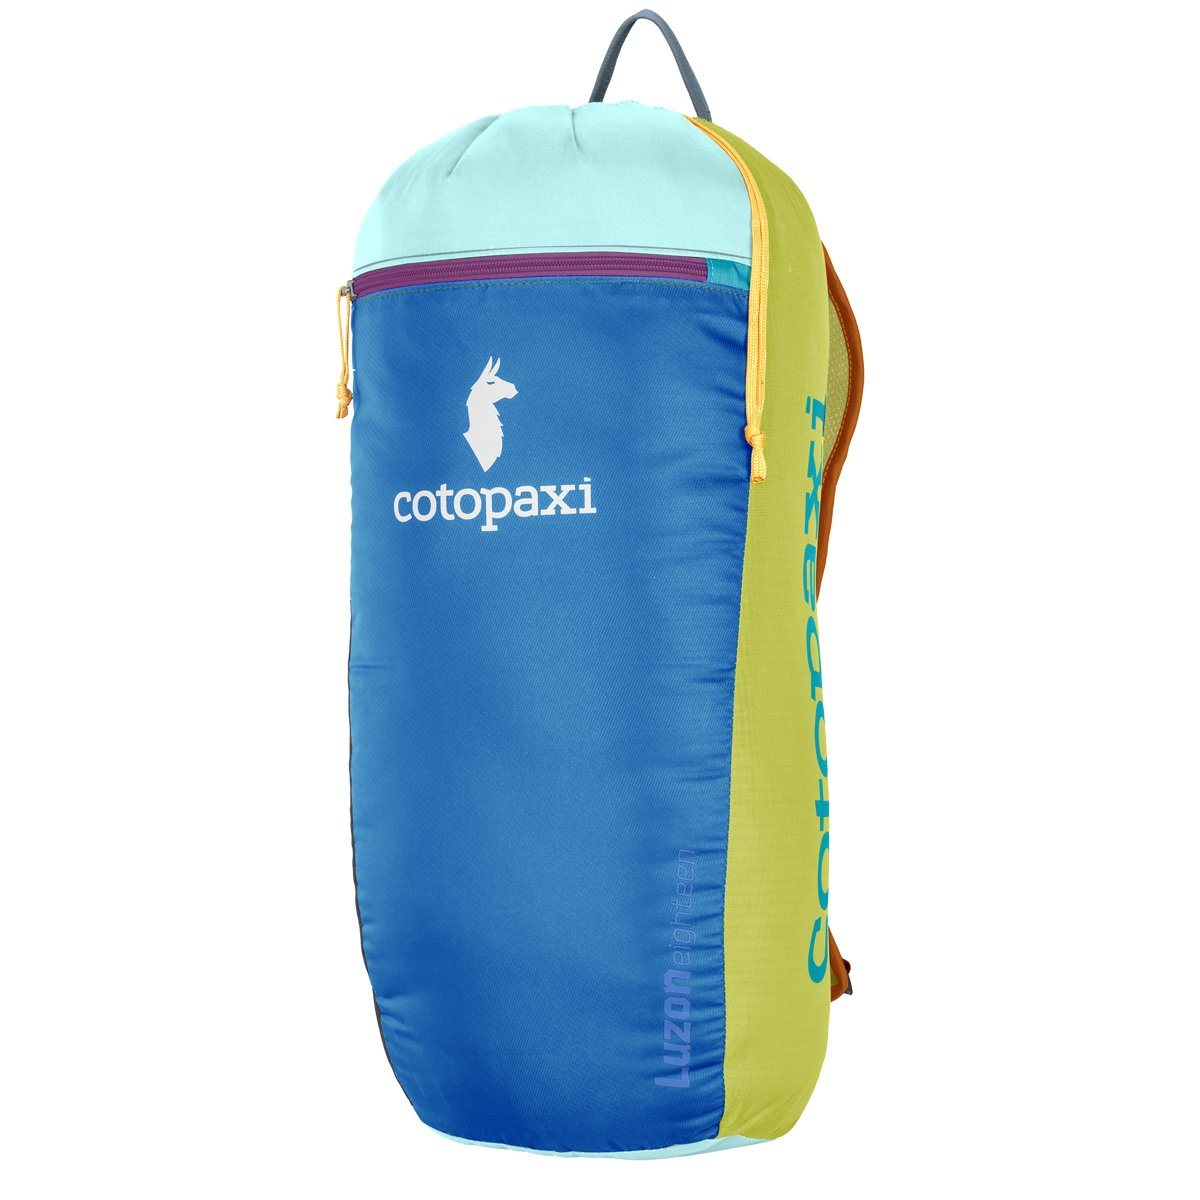 Cotopaxi Luzon 18L Backpack